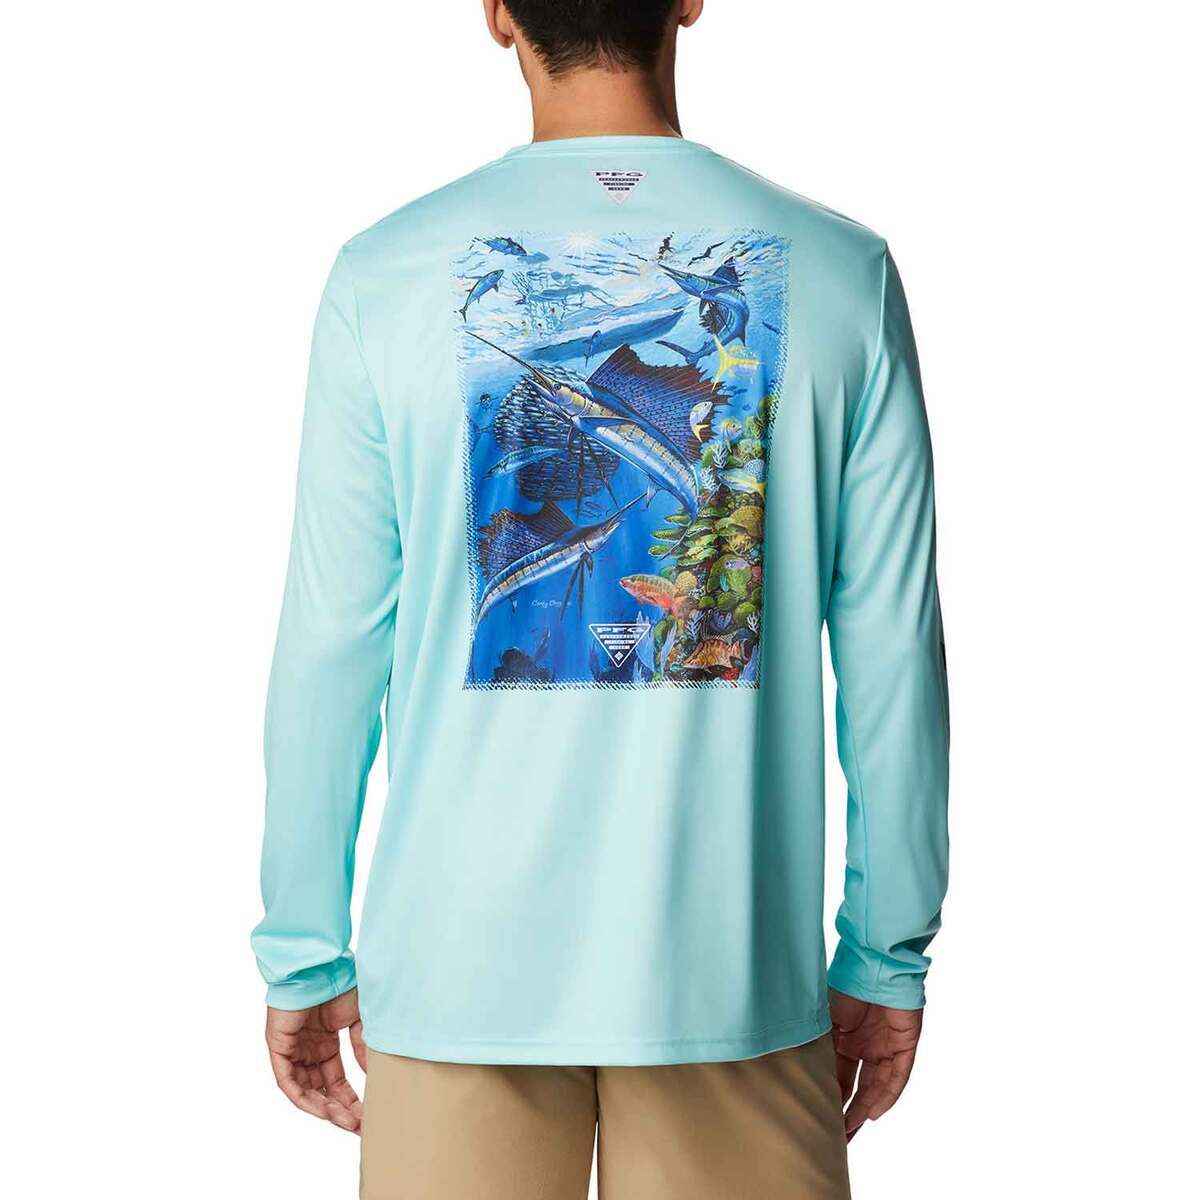 Columbia PFG fishing shirt with camo